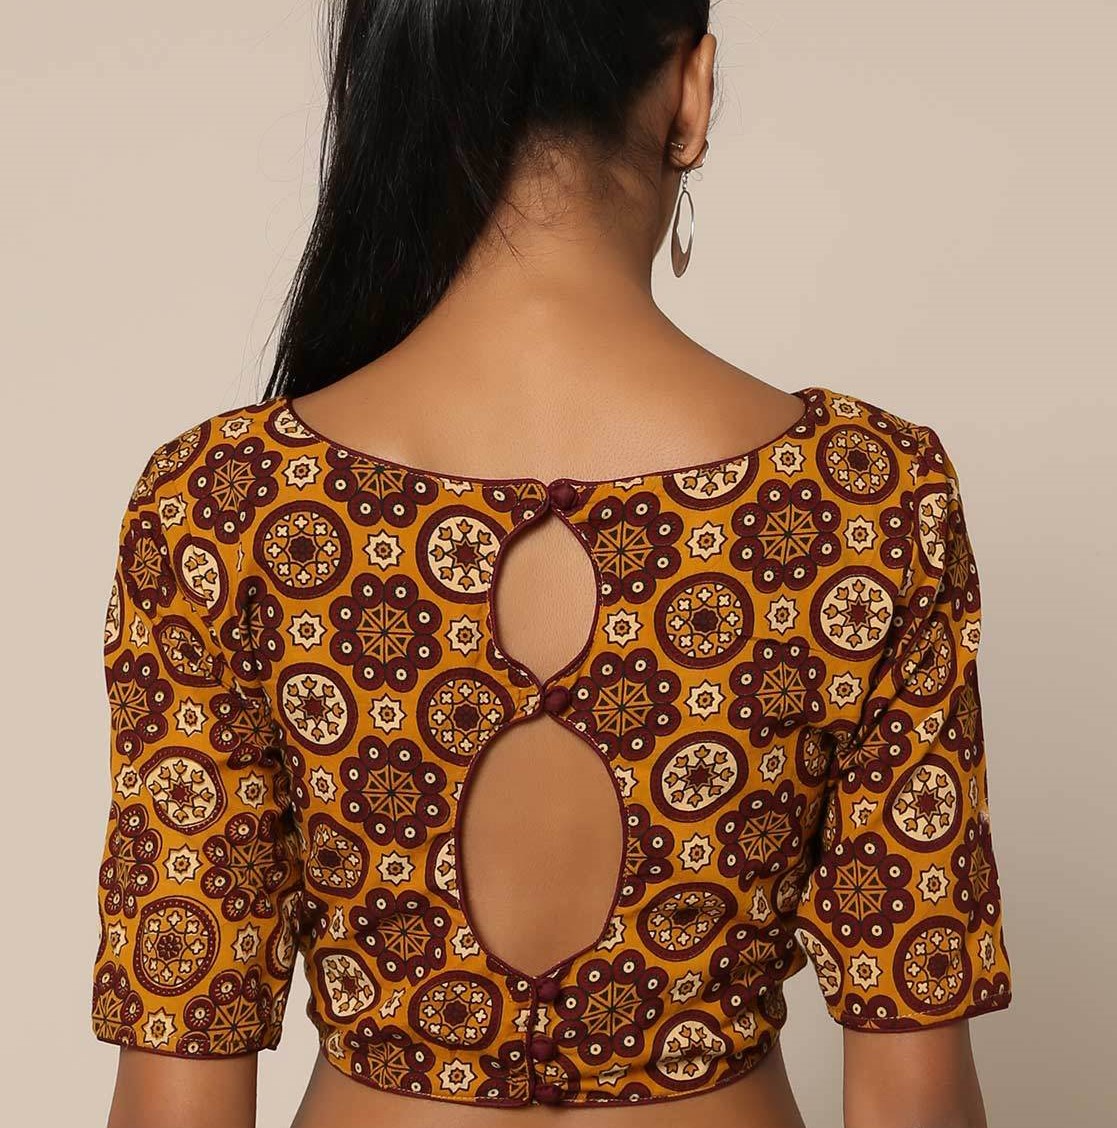 new blouse design for back hook neck